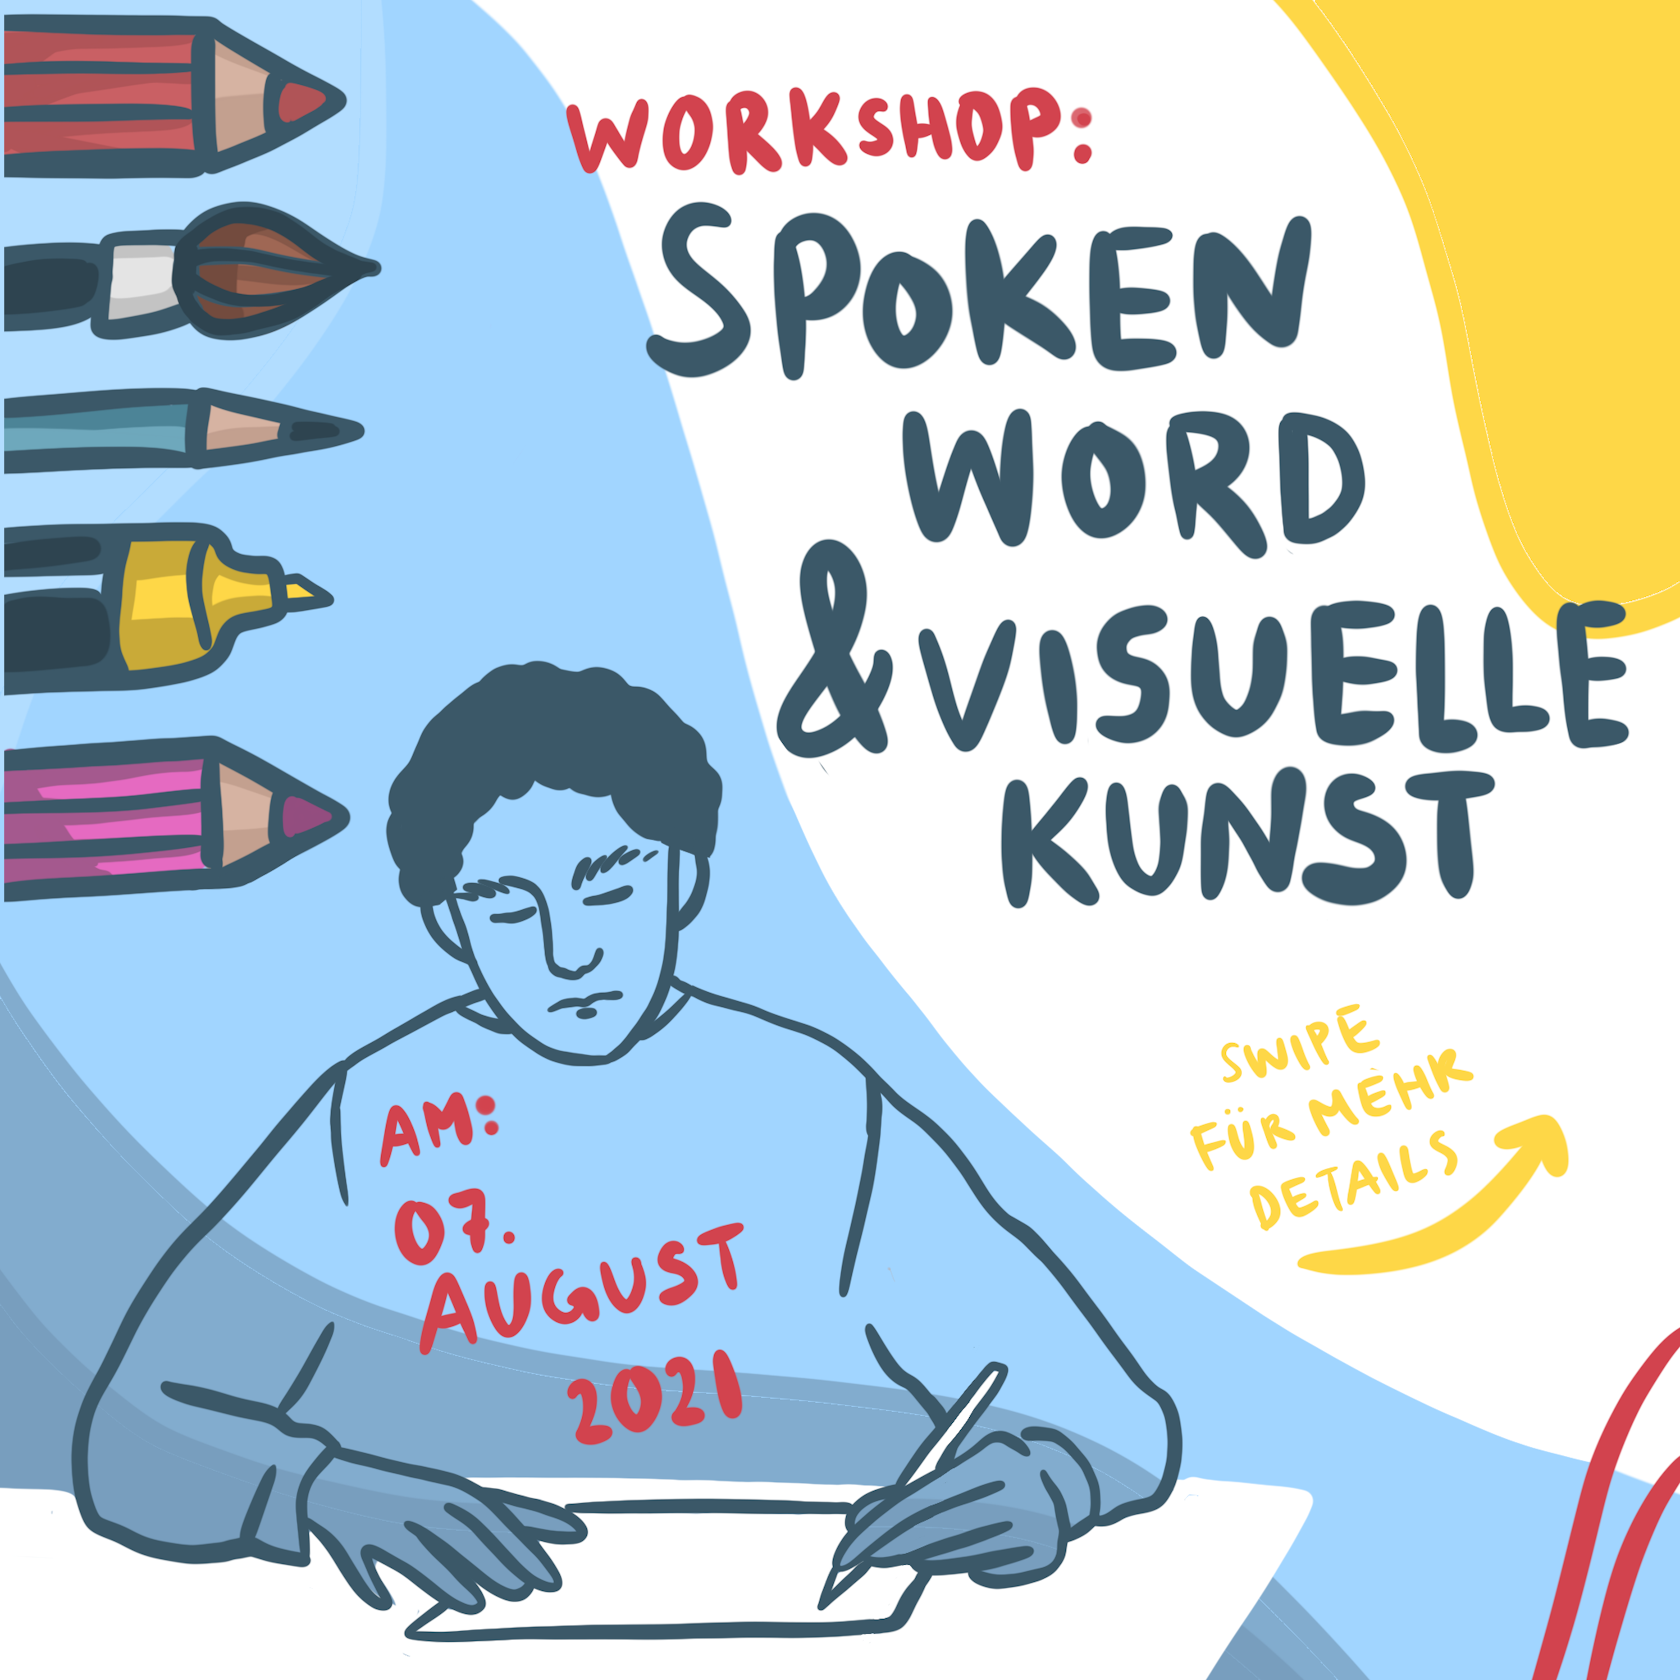 Spoken Word & Visuelle Kunst Flyer
